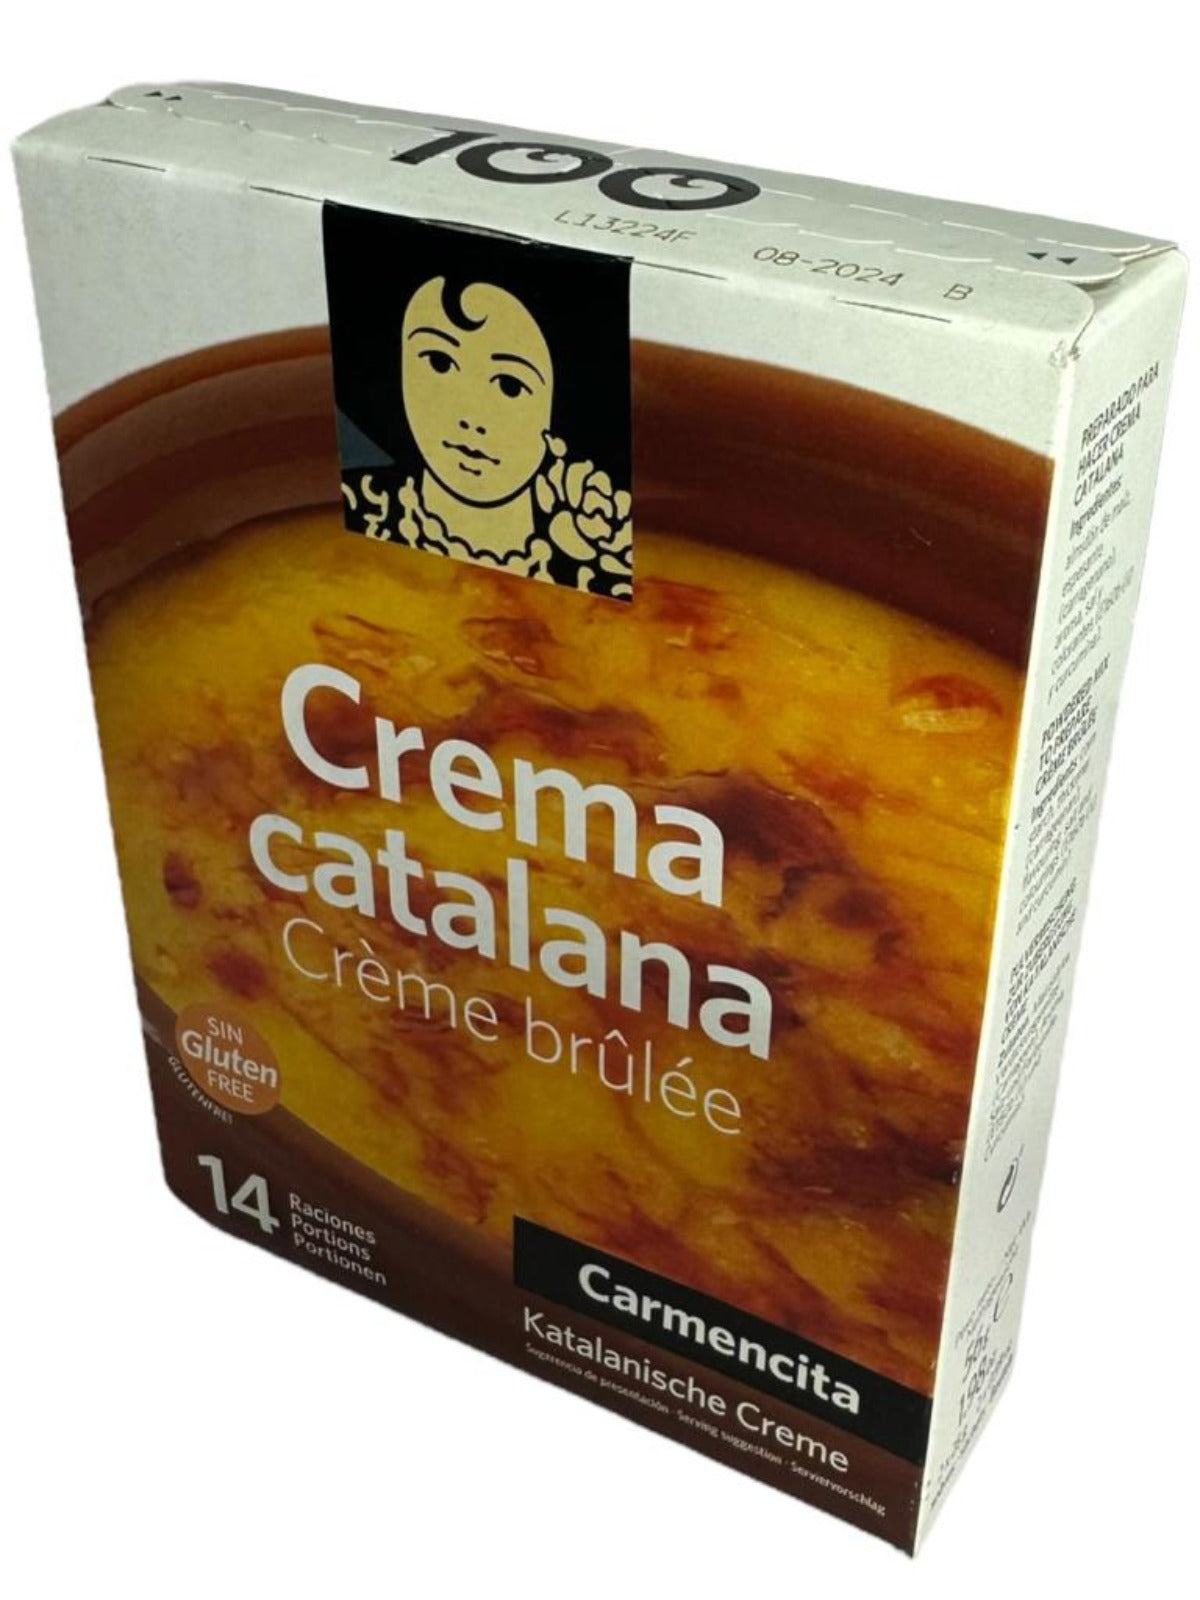 Carmencita Crema Catalana Creme Brulee 56g